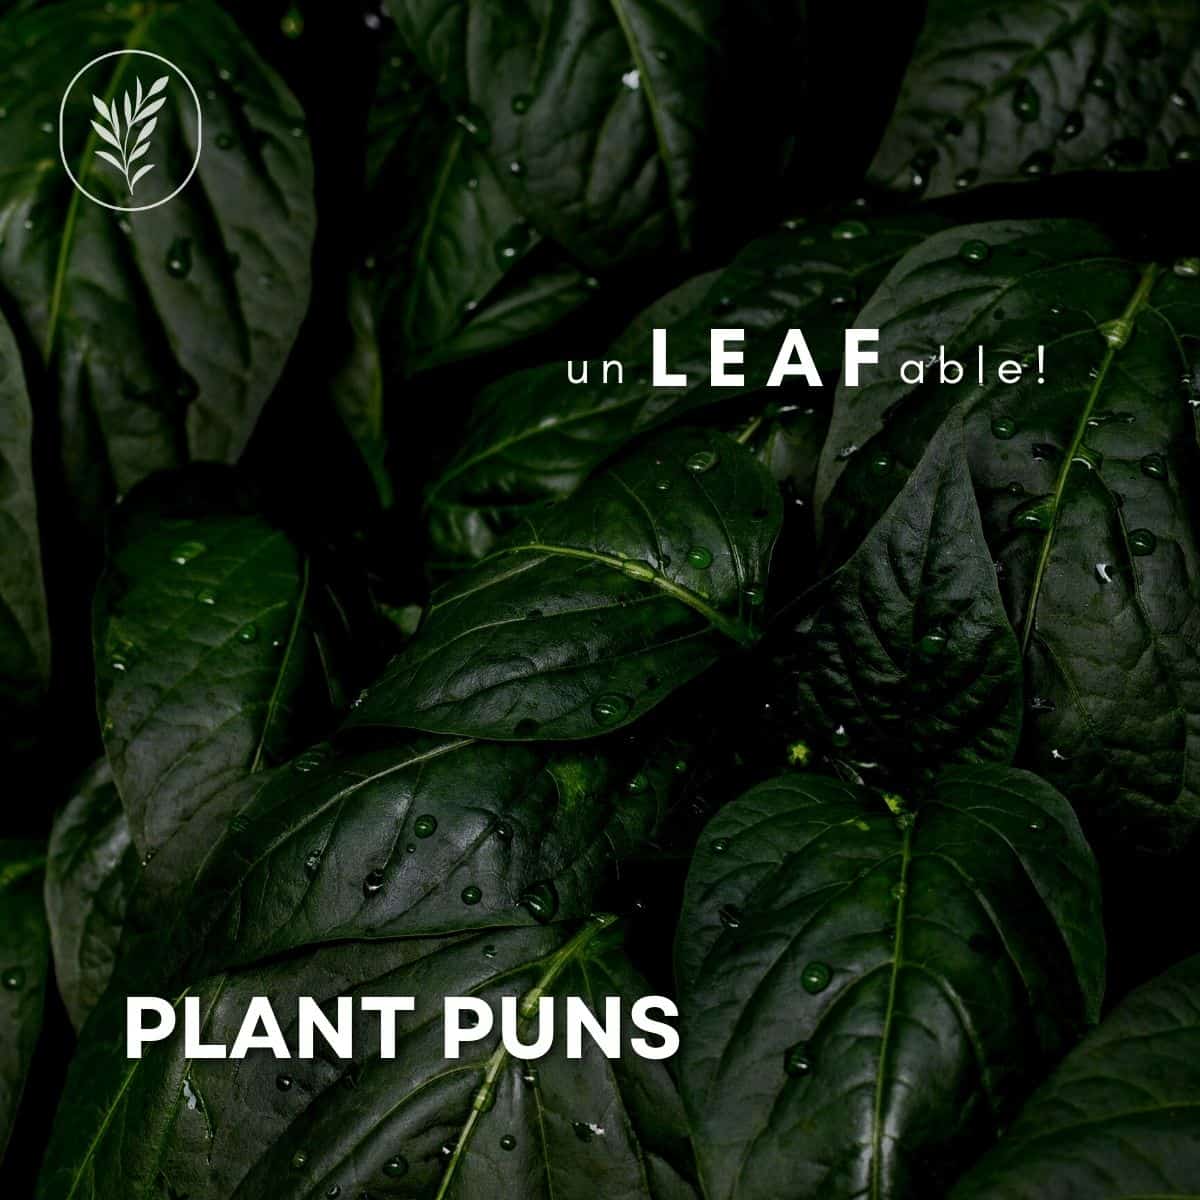 Plant puns via @home4theharvest